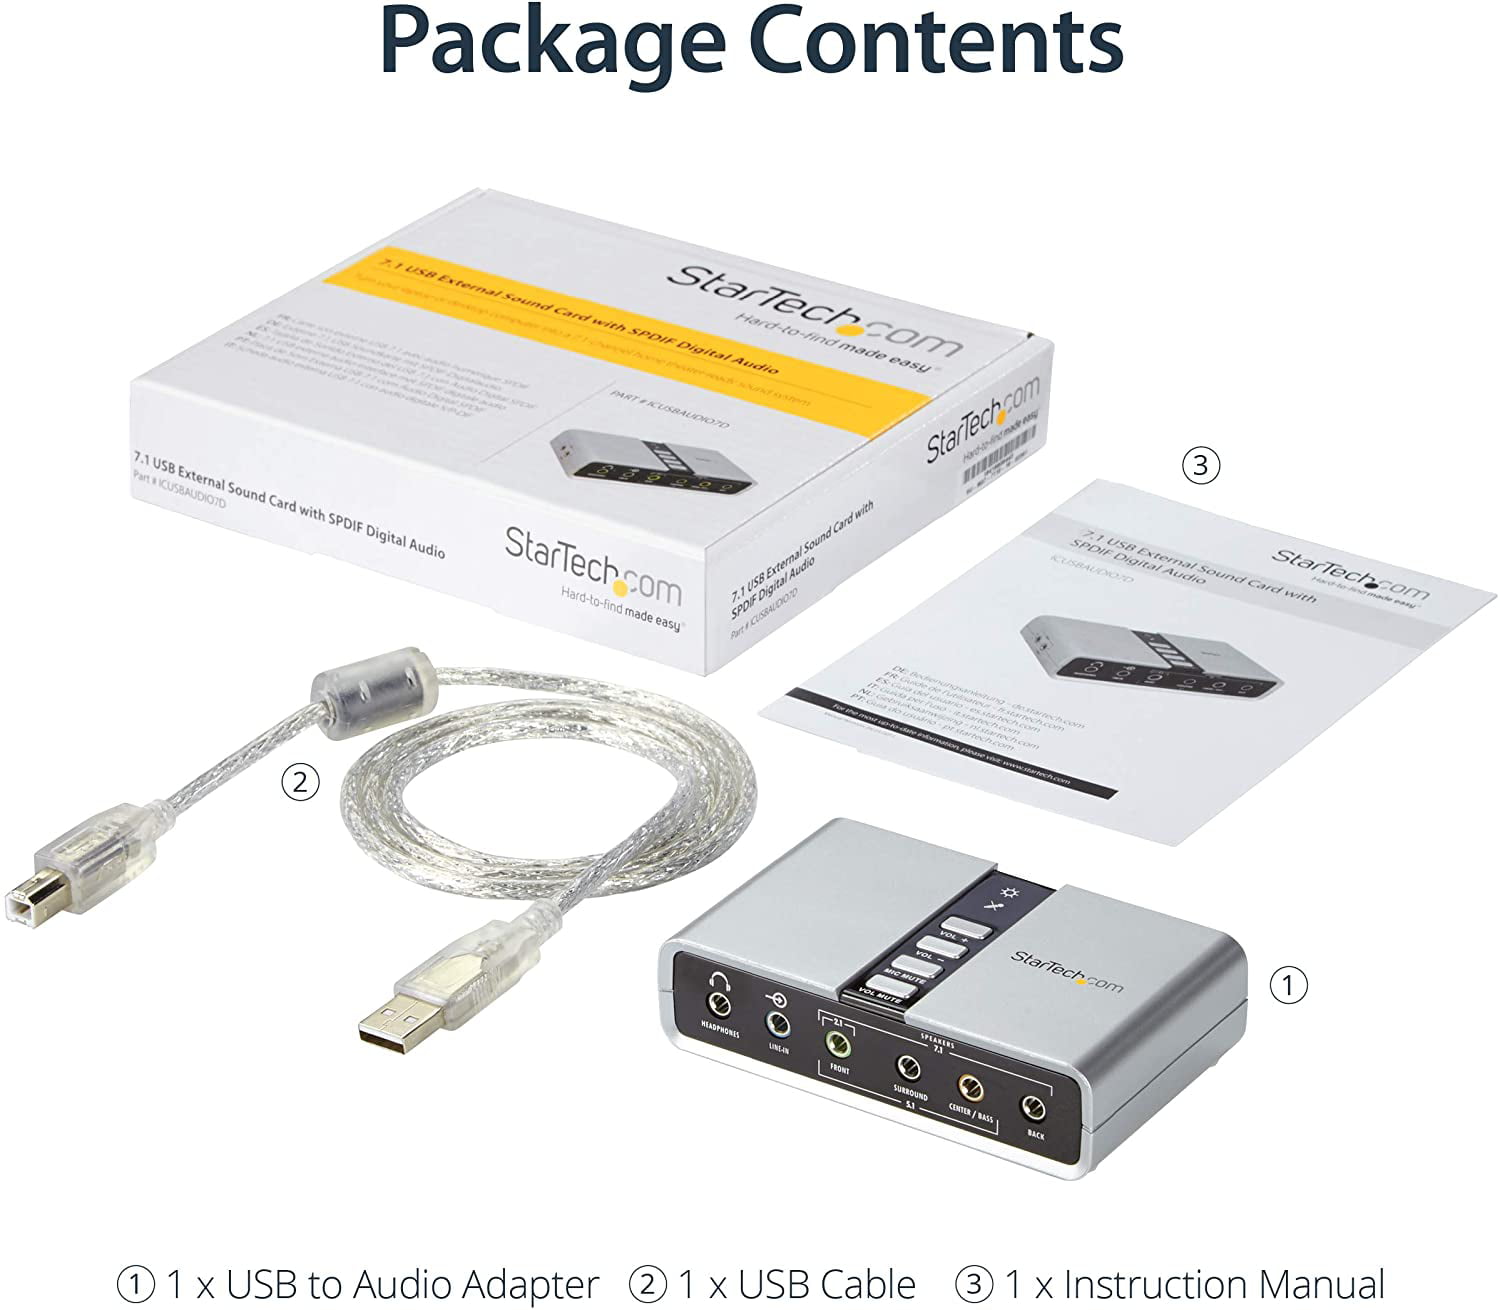 StarTech 7.1 USB Audio Adapter Sound Card with SPDIF Digital Audio - Sound card - 48 kHz - - USB 2.0 - Walmart.com